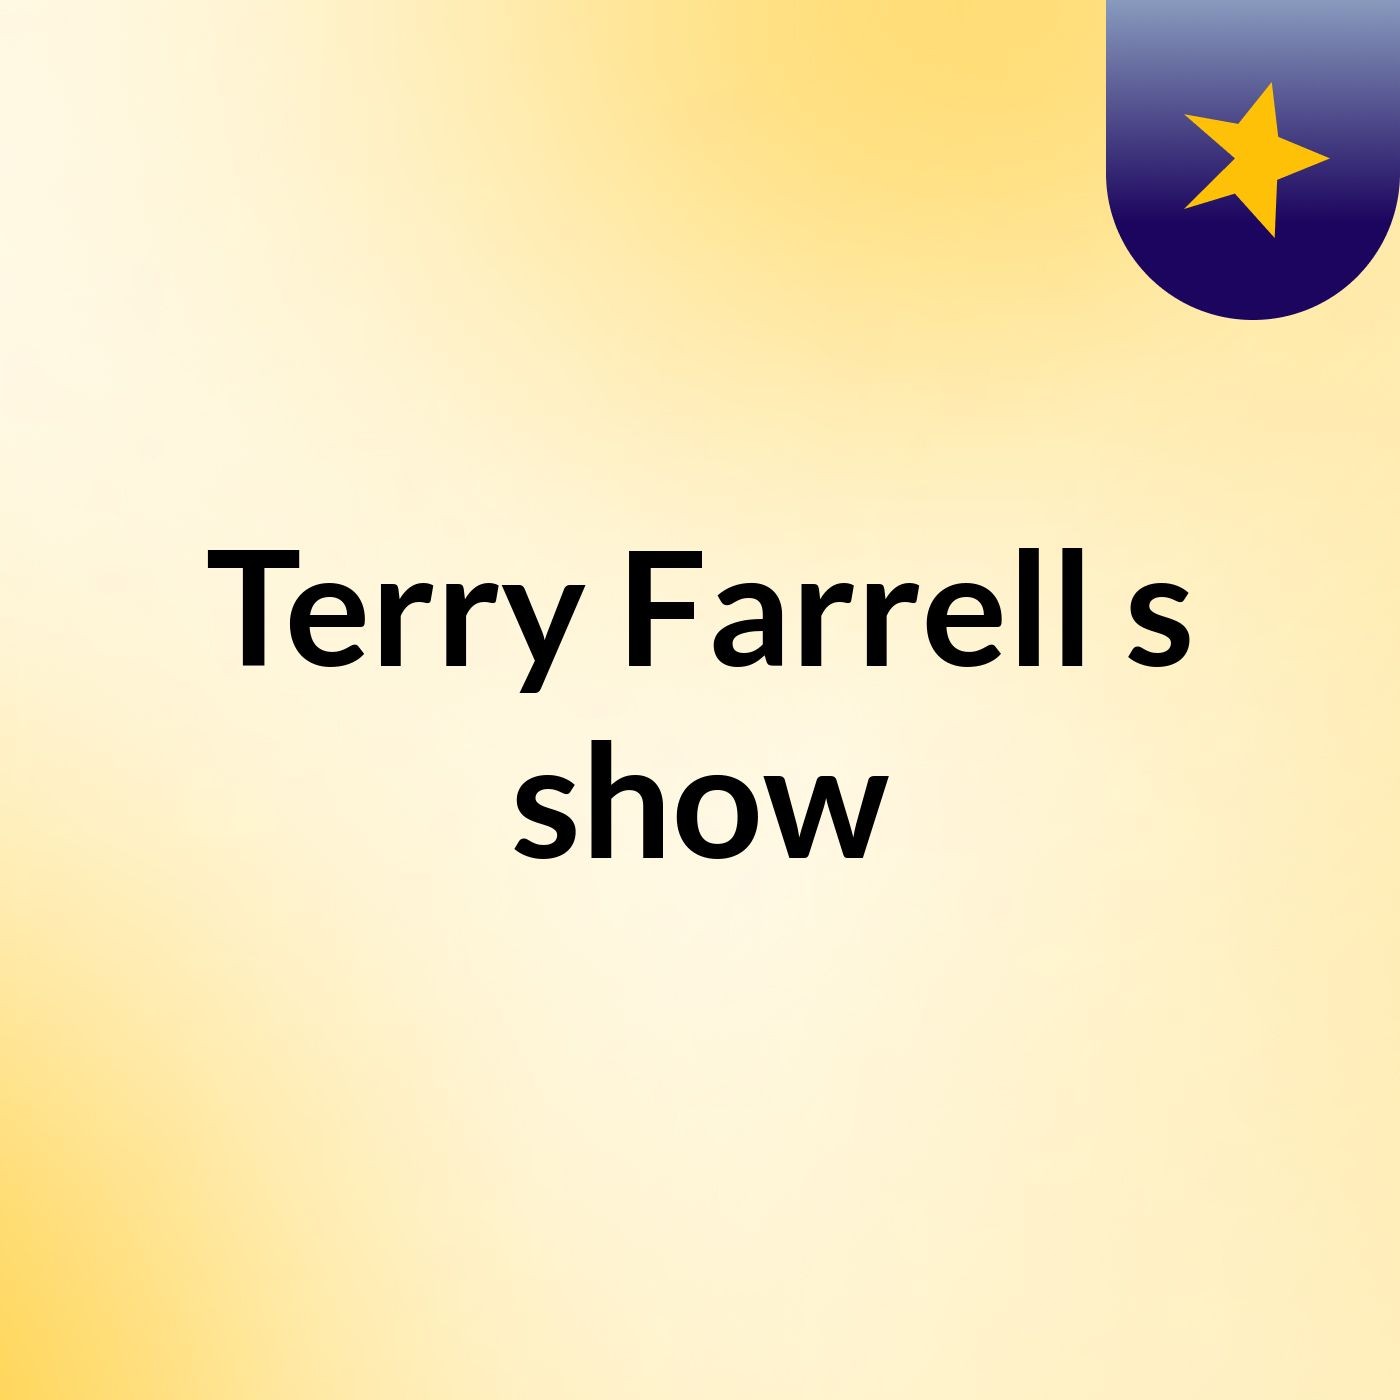 Terry Farrell's show